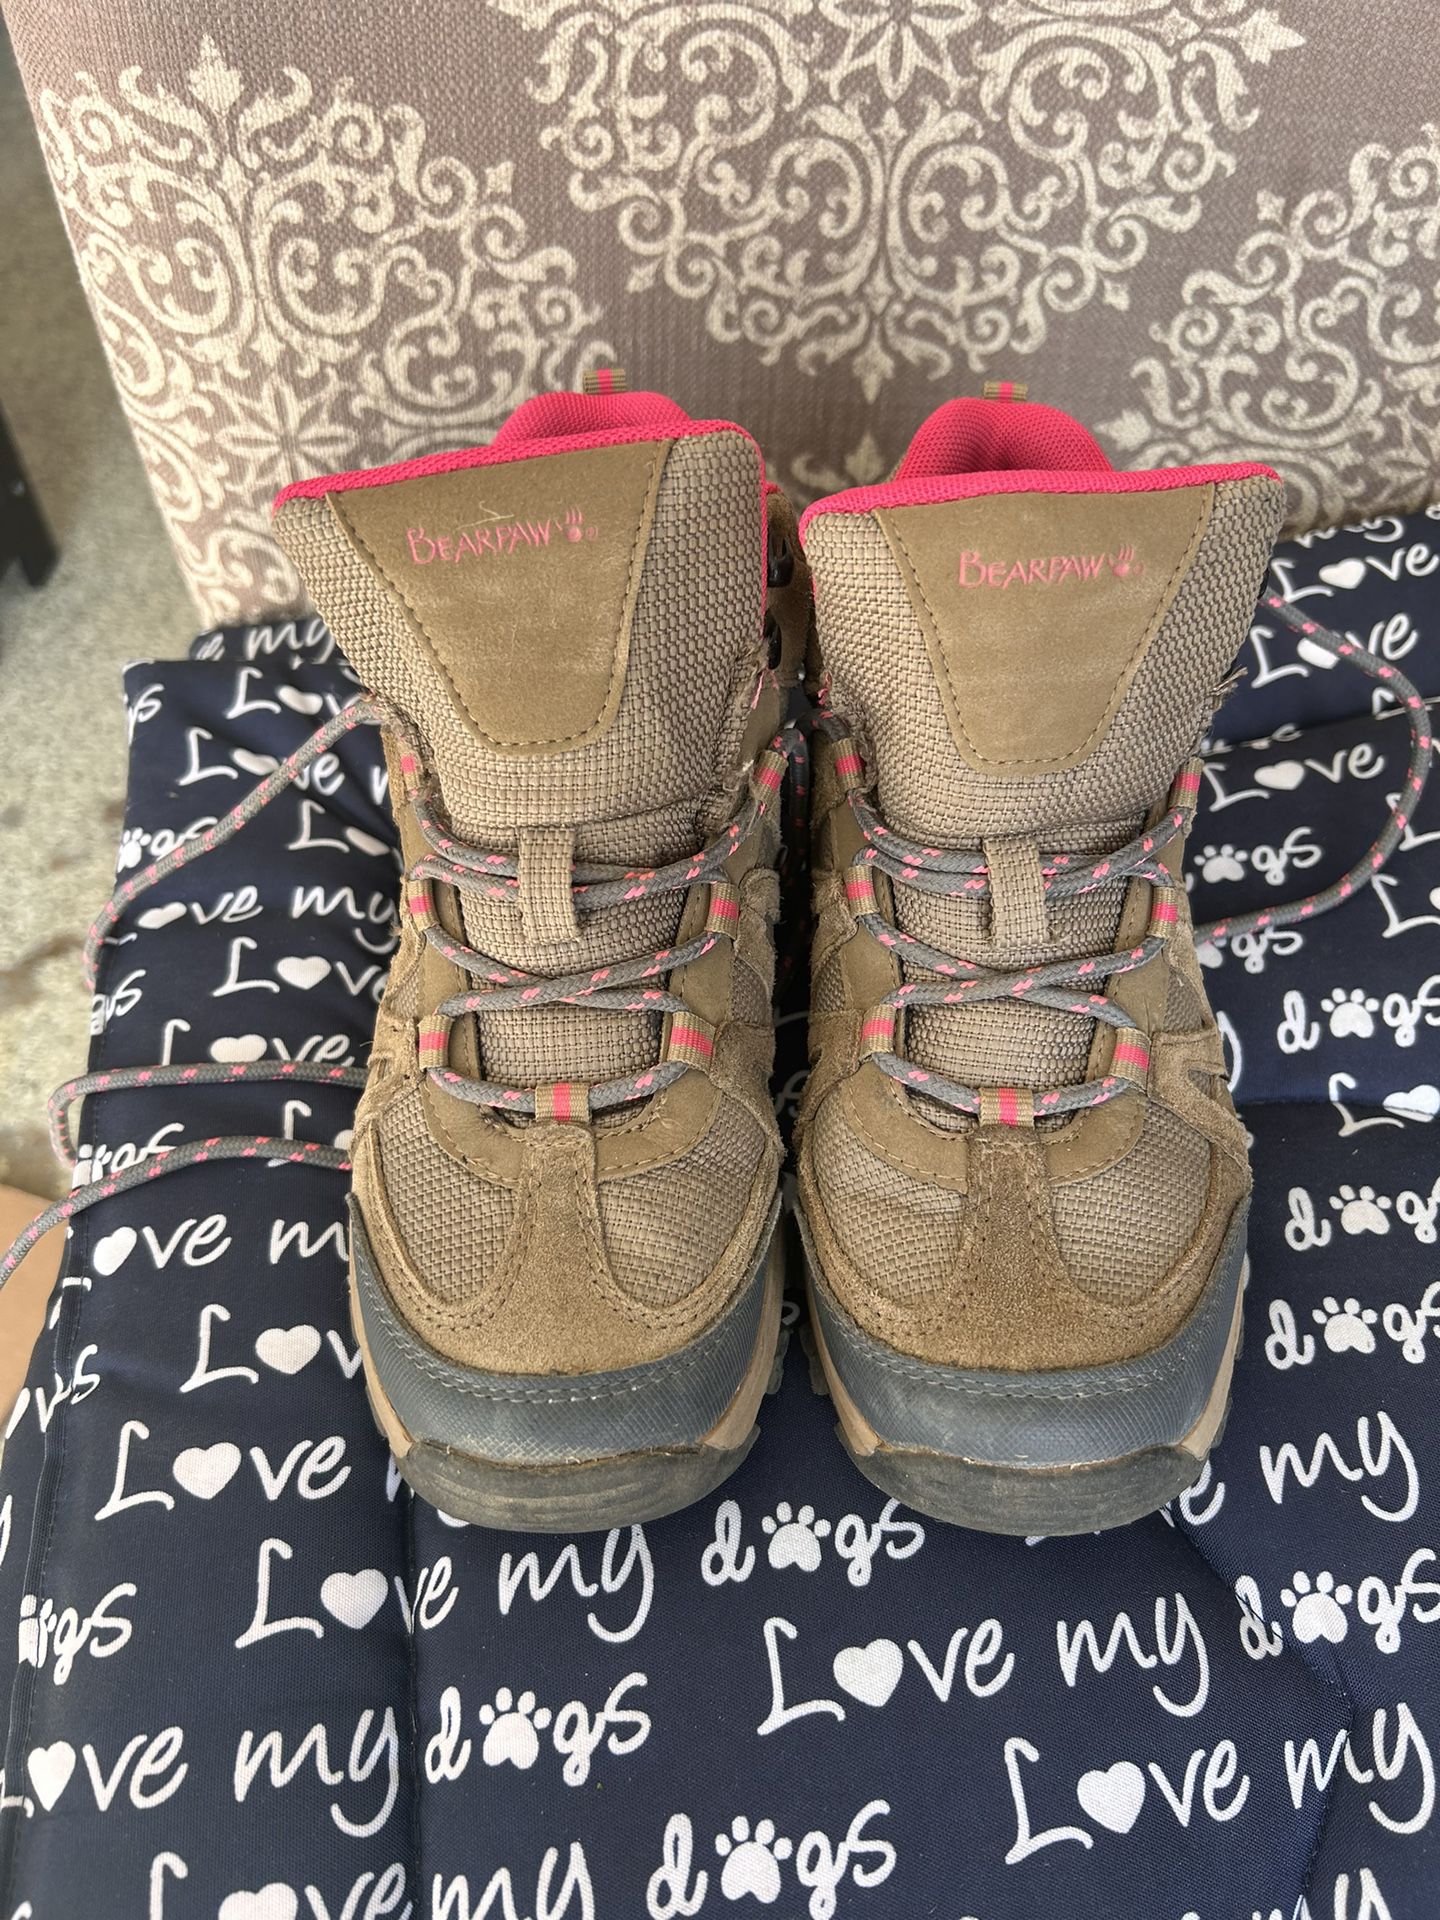 Bear paw Hiking Boots 